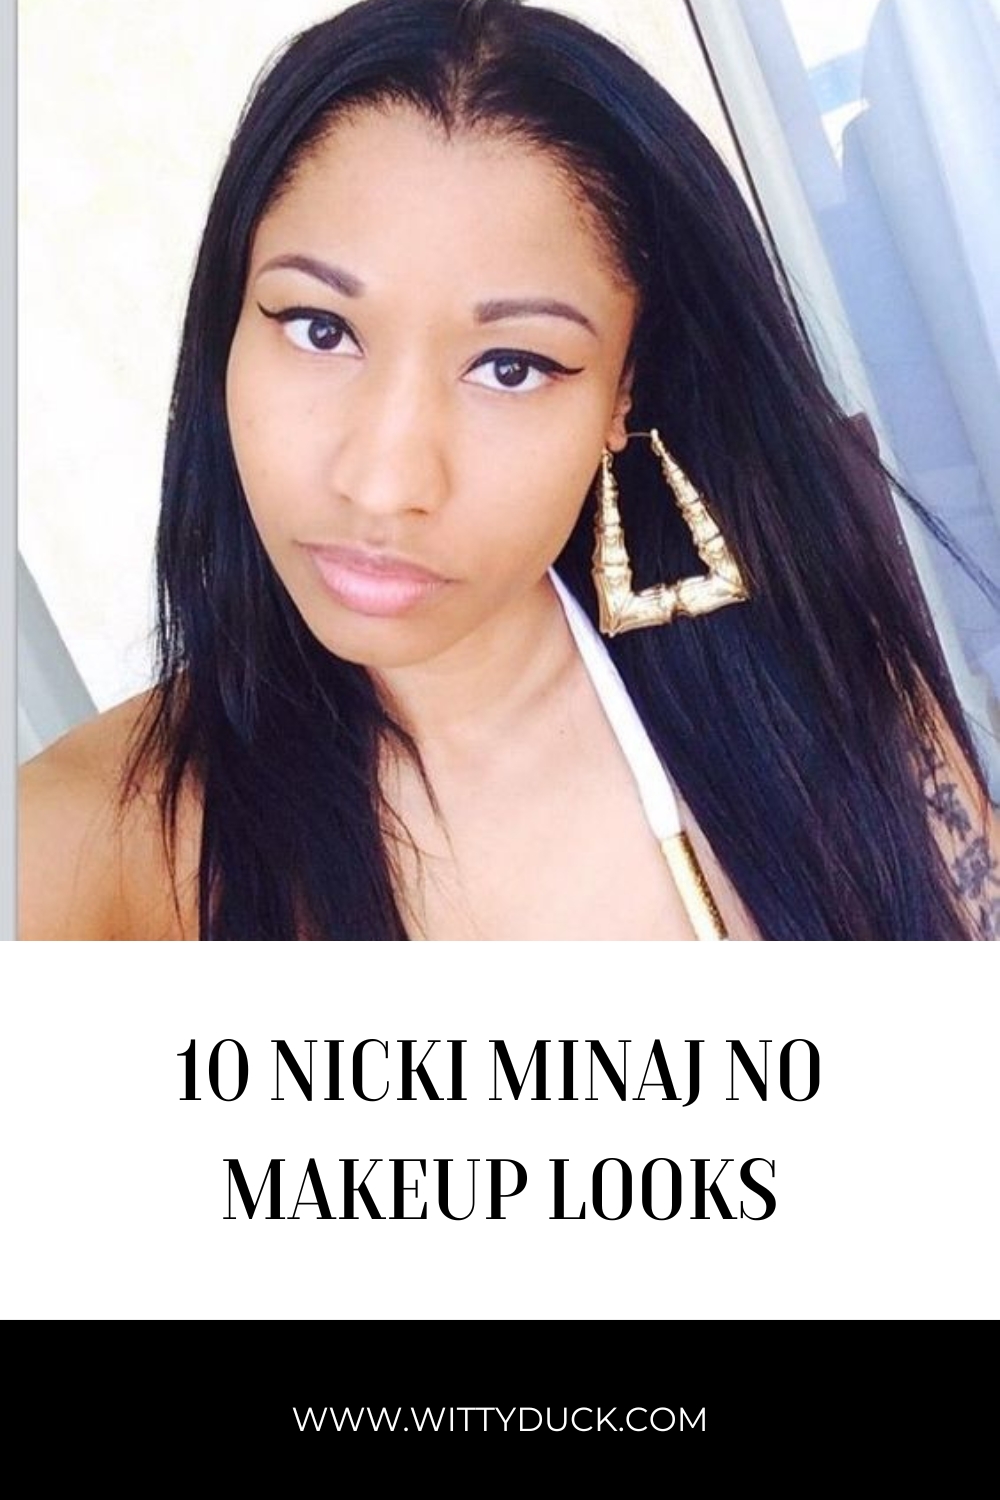 10 Nicki Minaj no makeup Looks